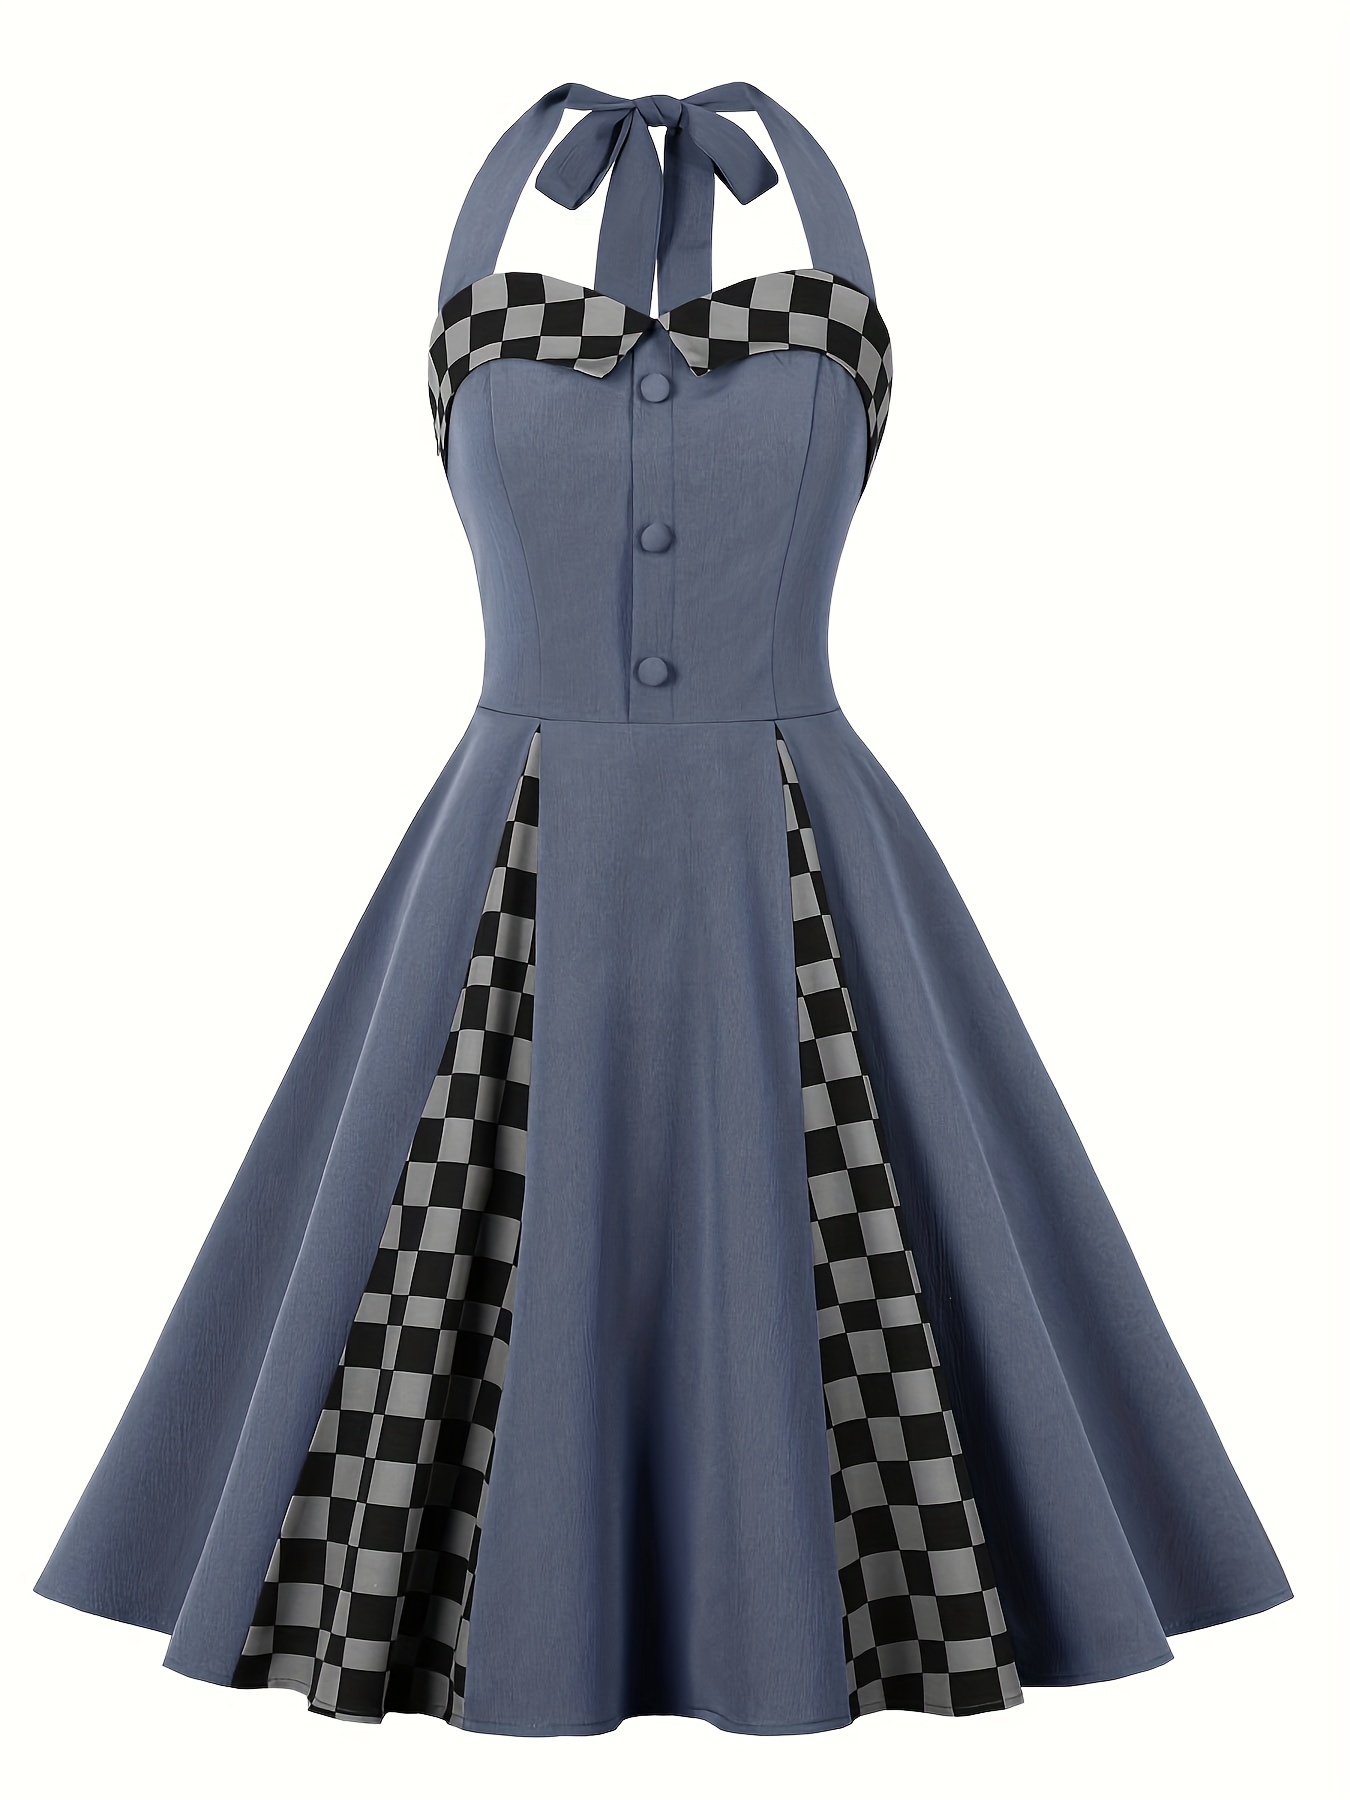 Rockabilly Swing Dress  Vintage tea party dresses, Vintage outfits,  Vintage fashion